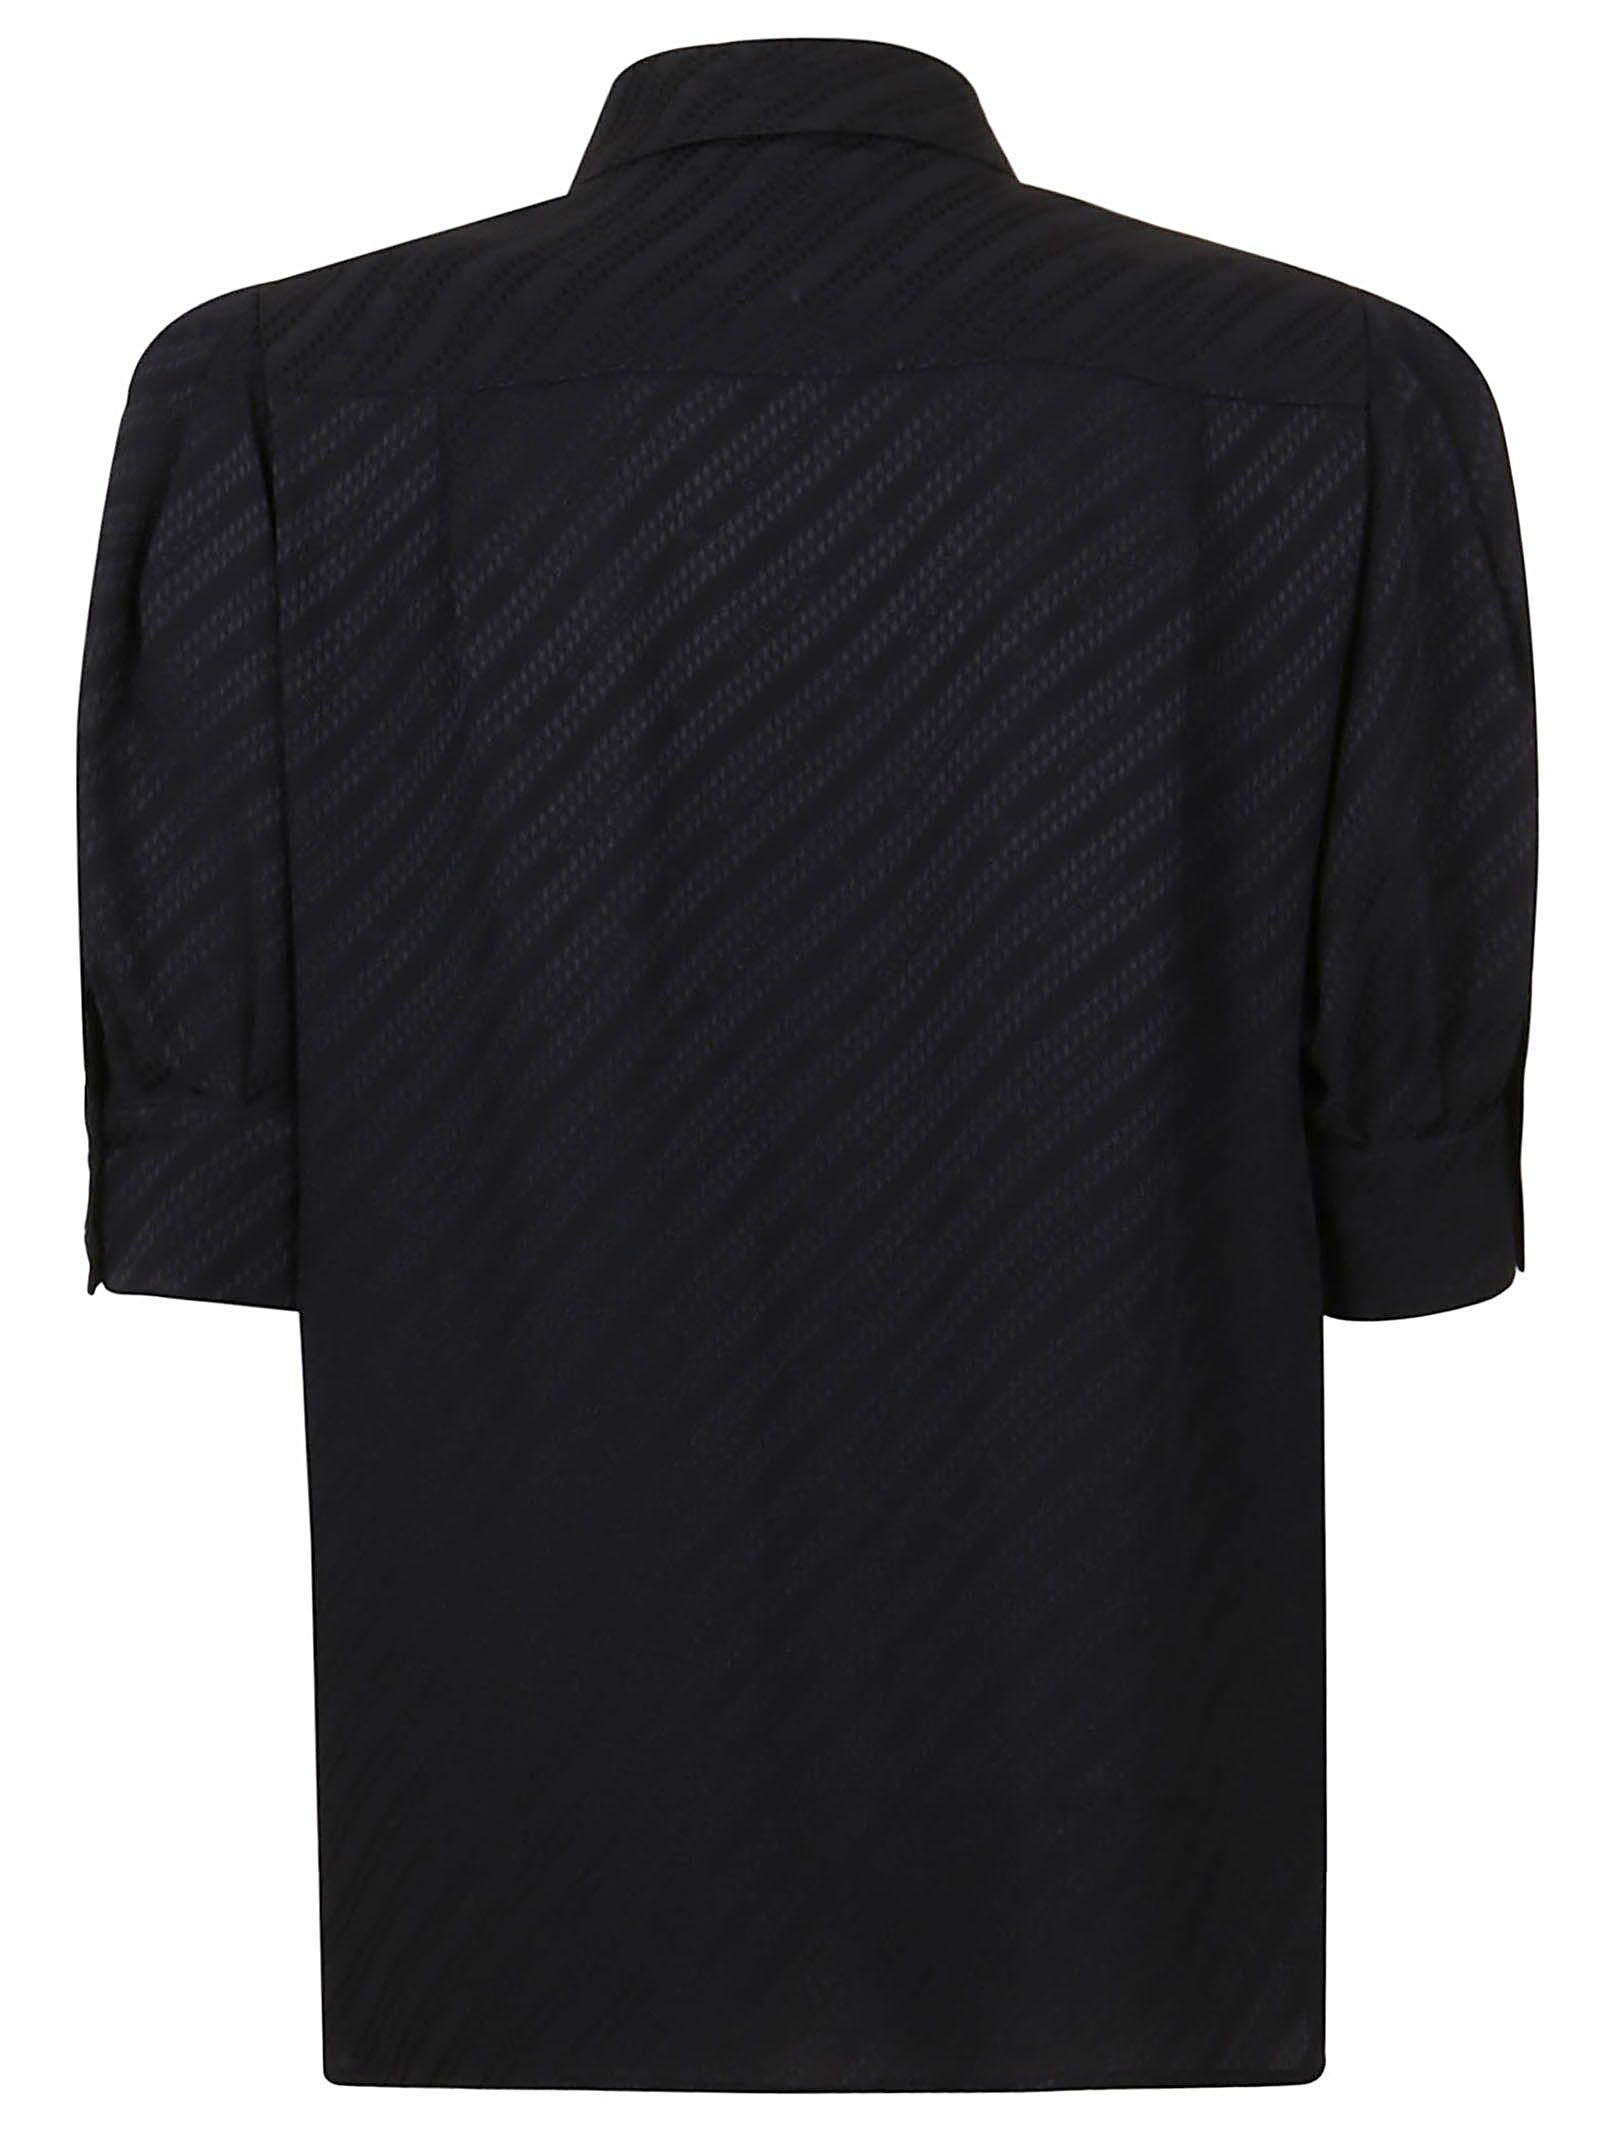 Givenchy Women's BW60Pl12Jb001 Black Silk Shirt